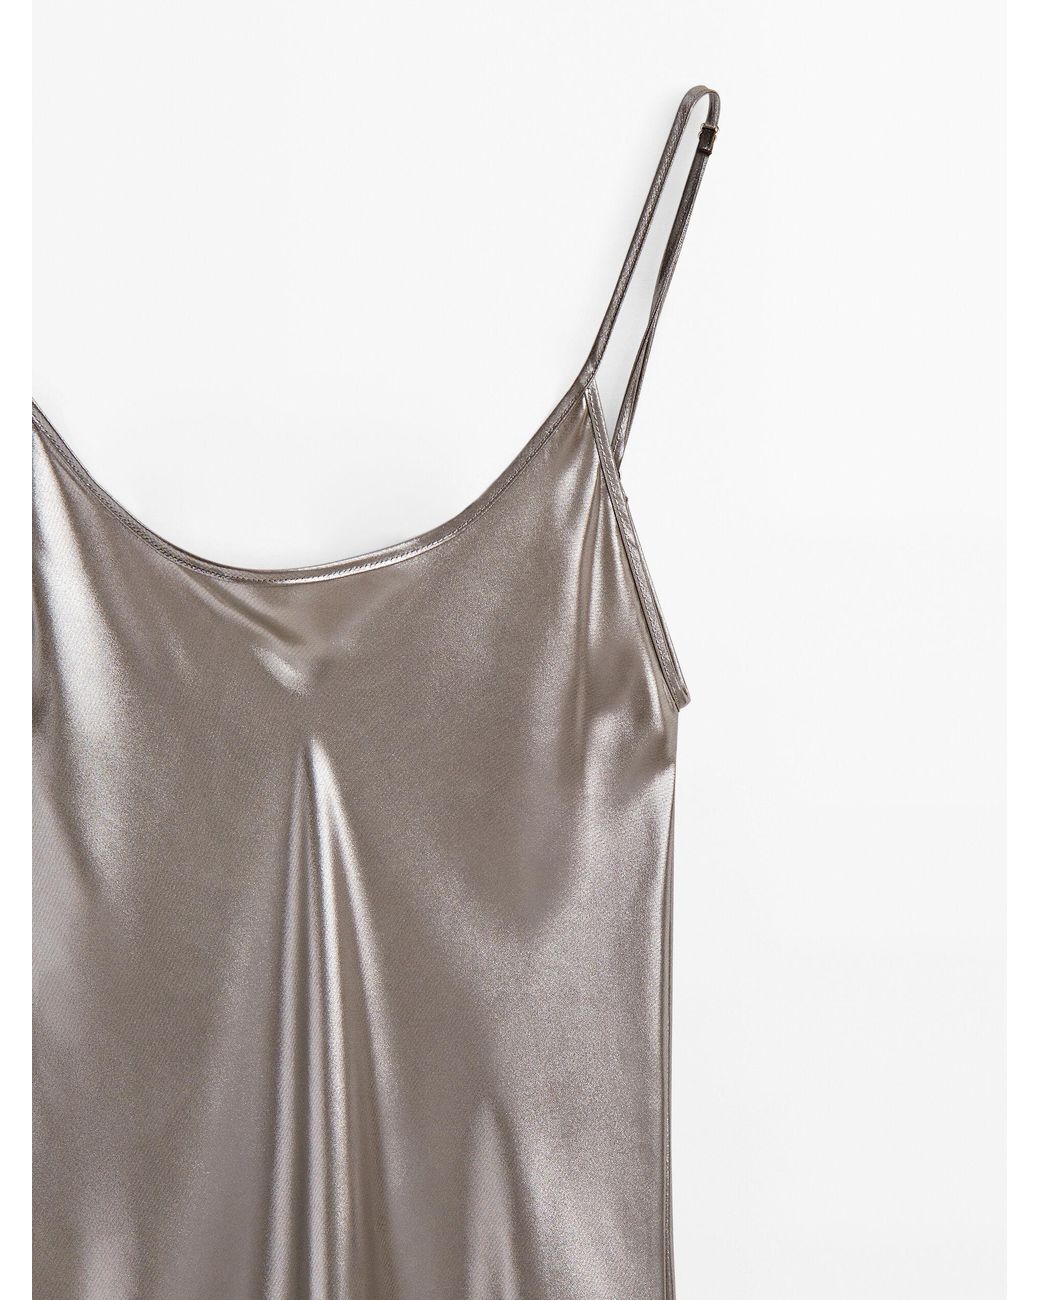 MASSIMO DUTTI Metallic Camisole Dress -Studio